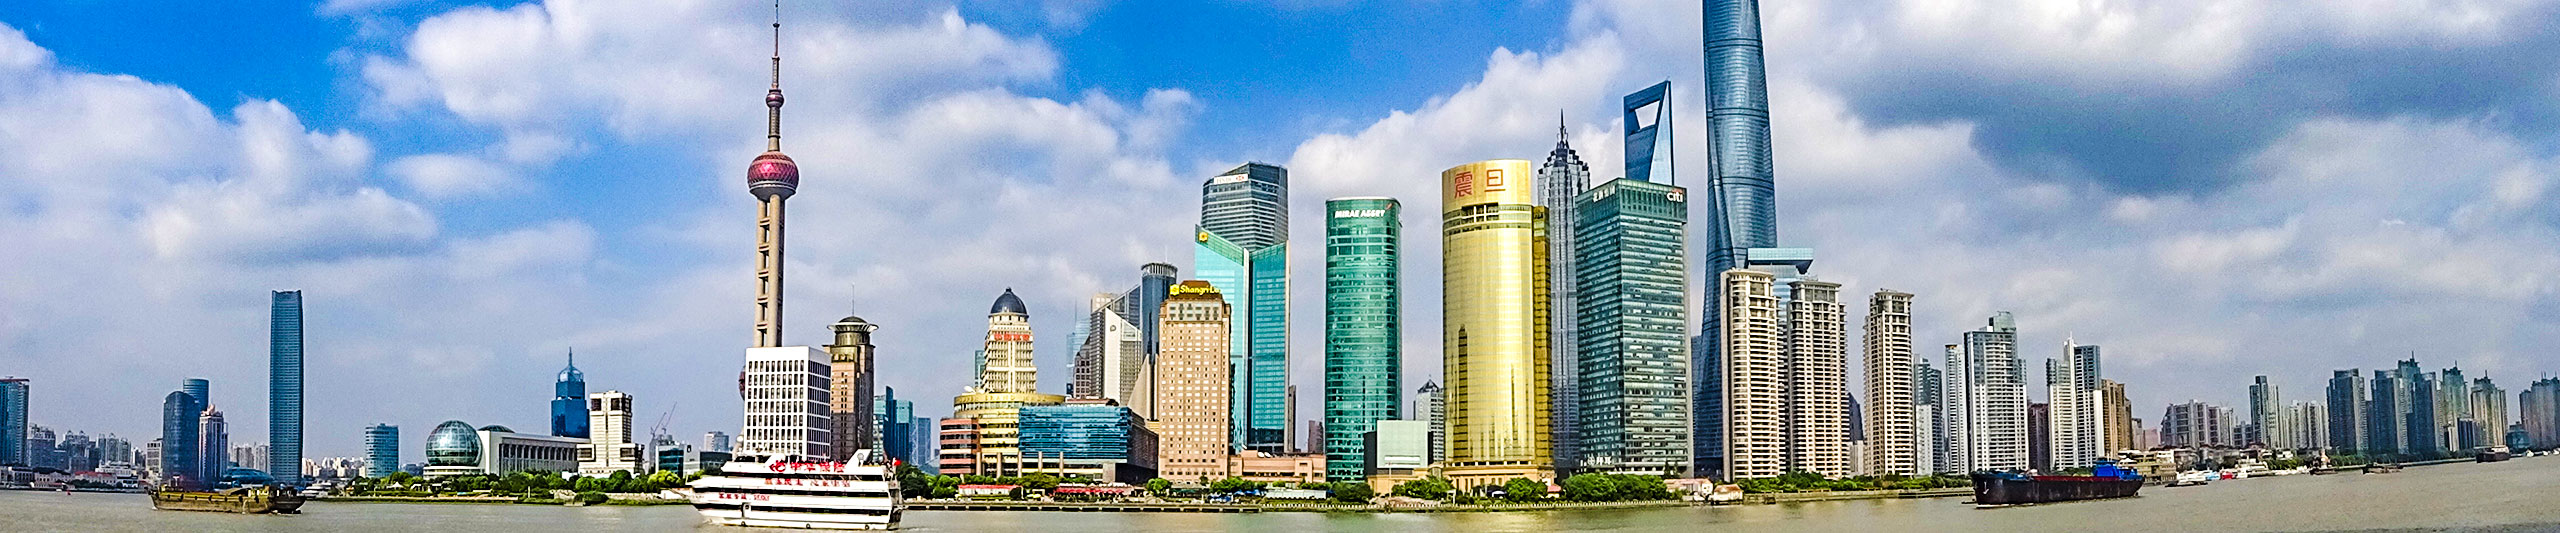 Shanghai Xin Tian Di